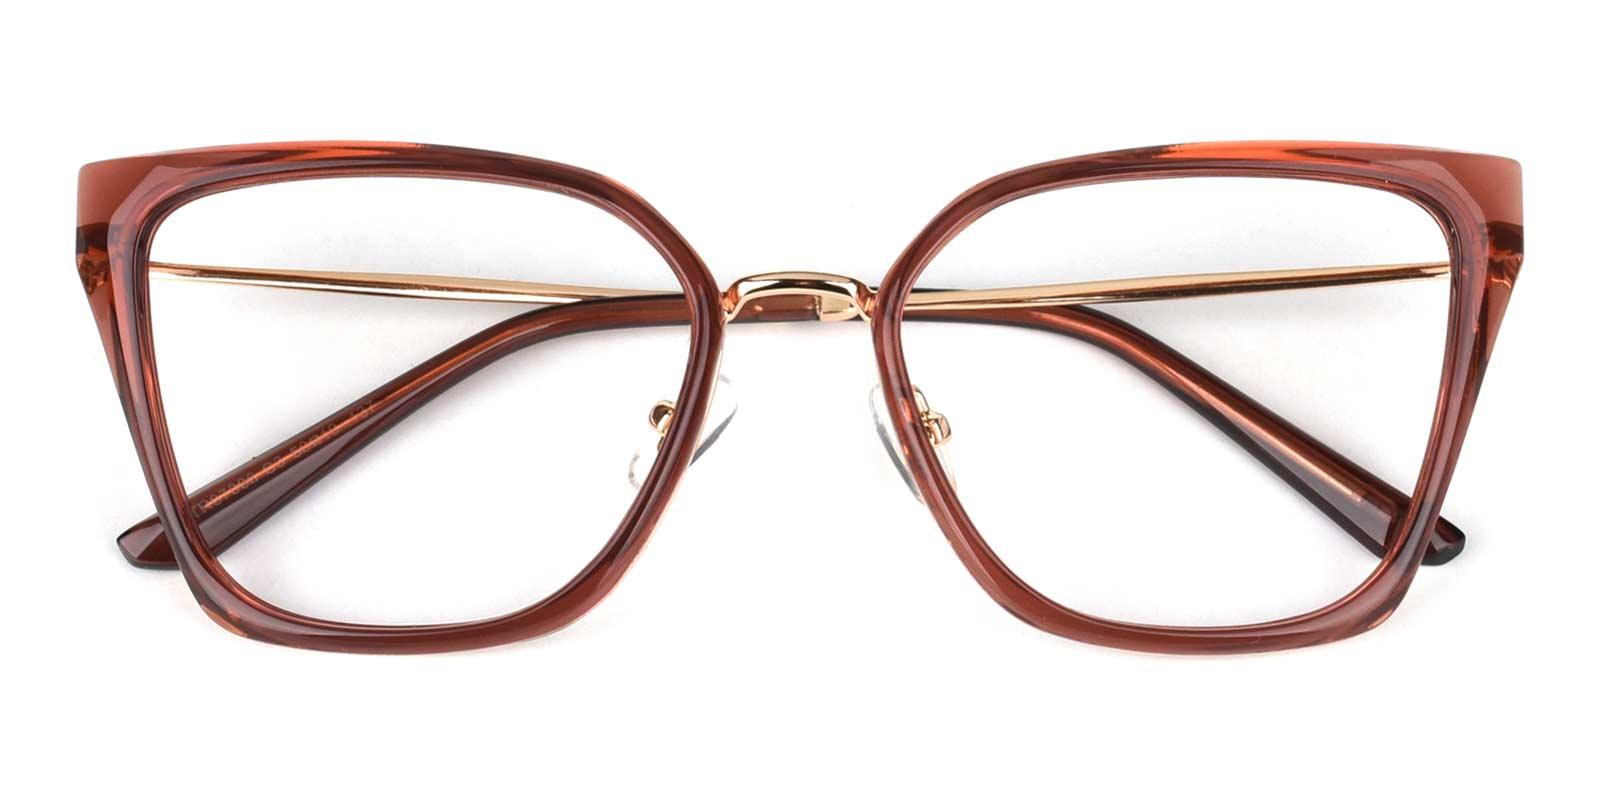 Myra-Red-Cat-TR-Eyeglasses-detail